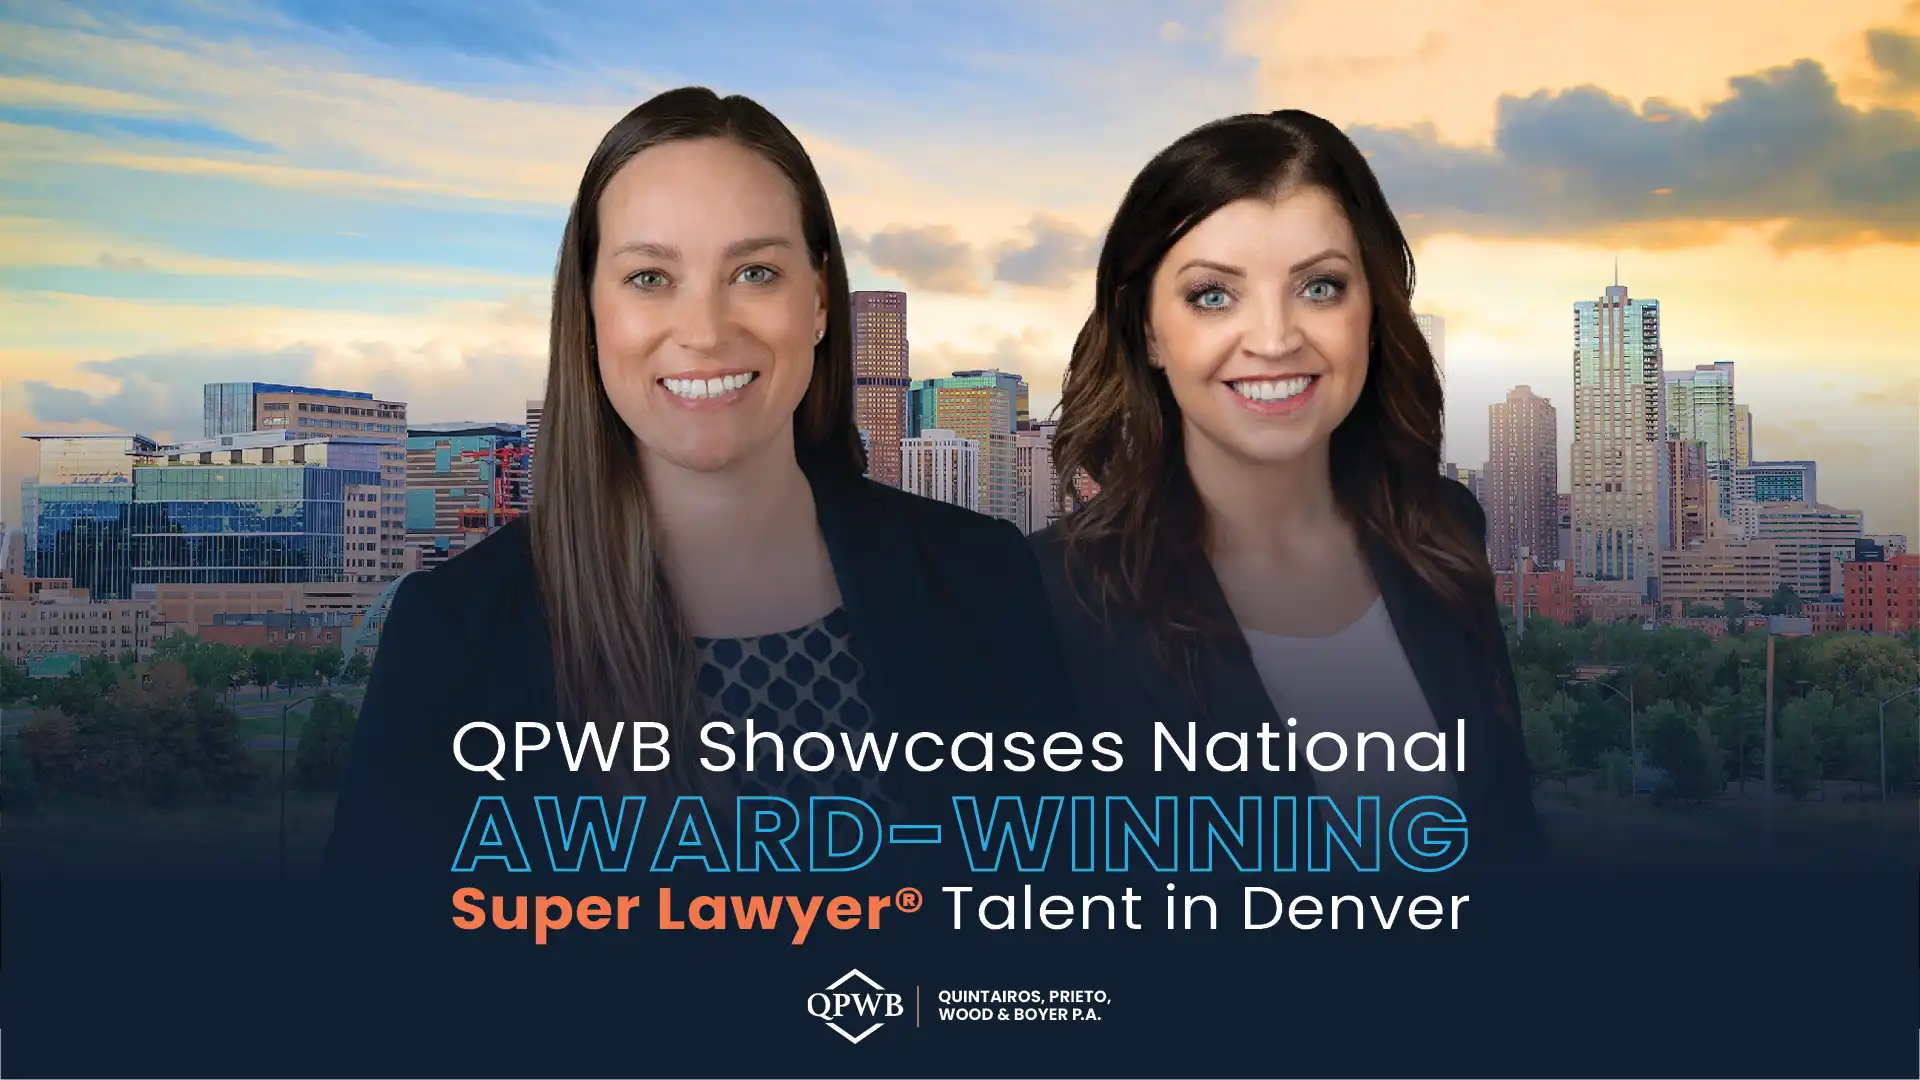 QPWB Showcases National Award-Winning Super Lawyer® Talent in Denver